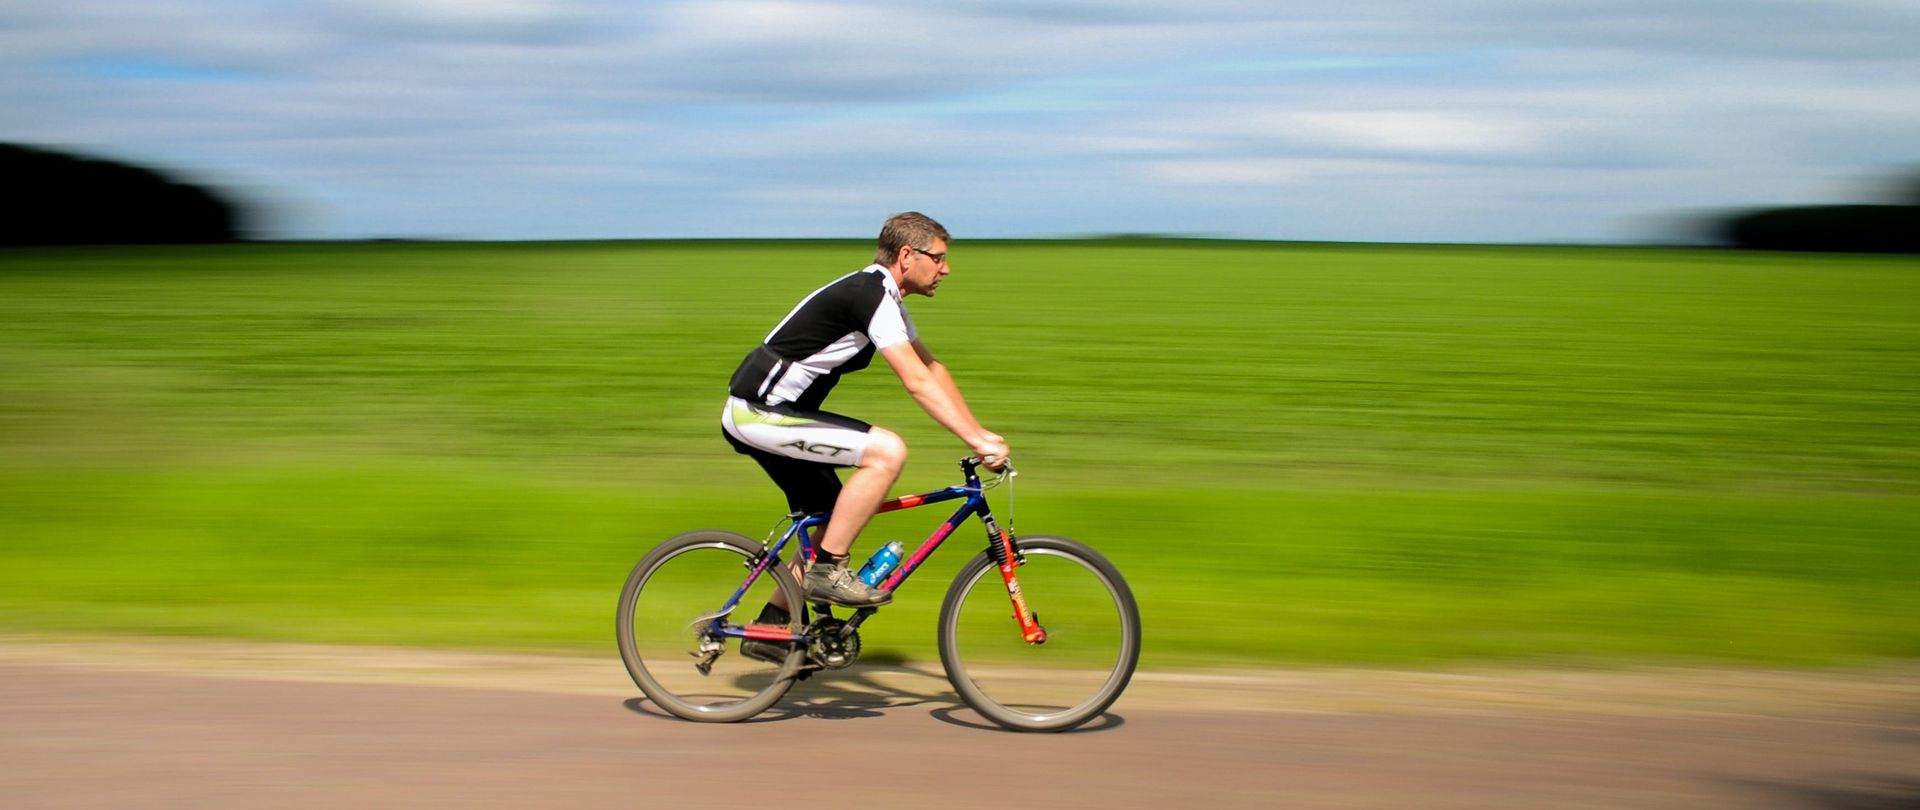 man cycling near field